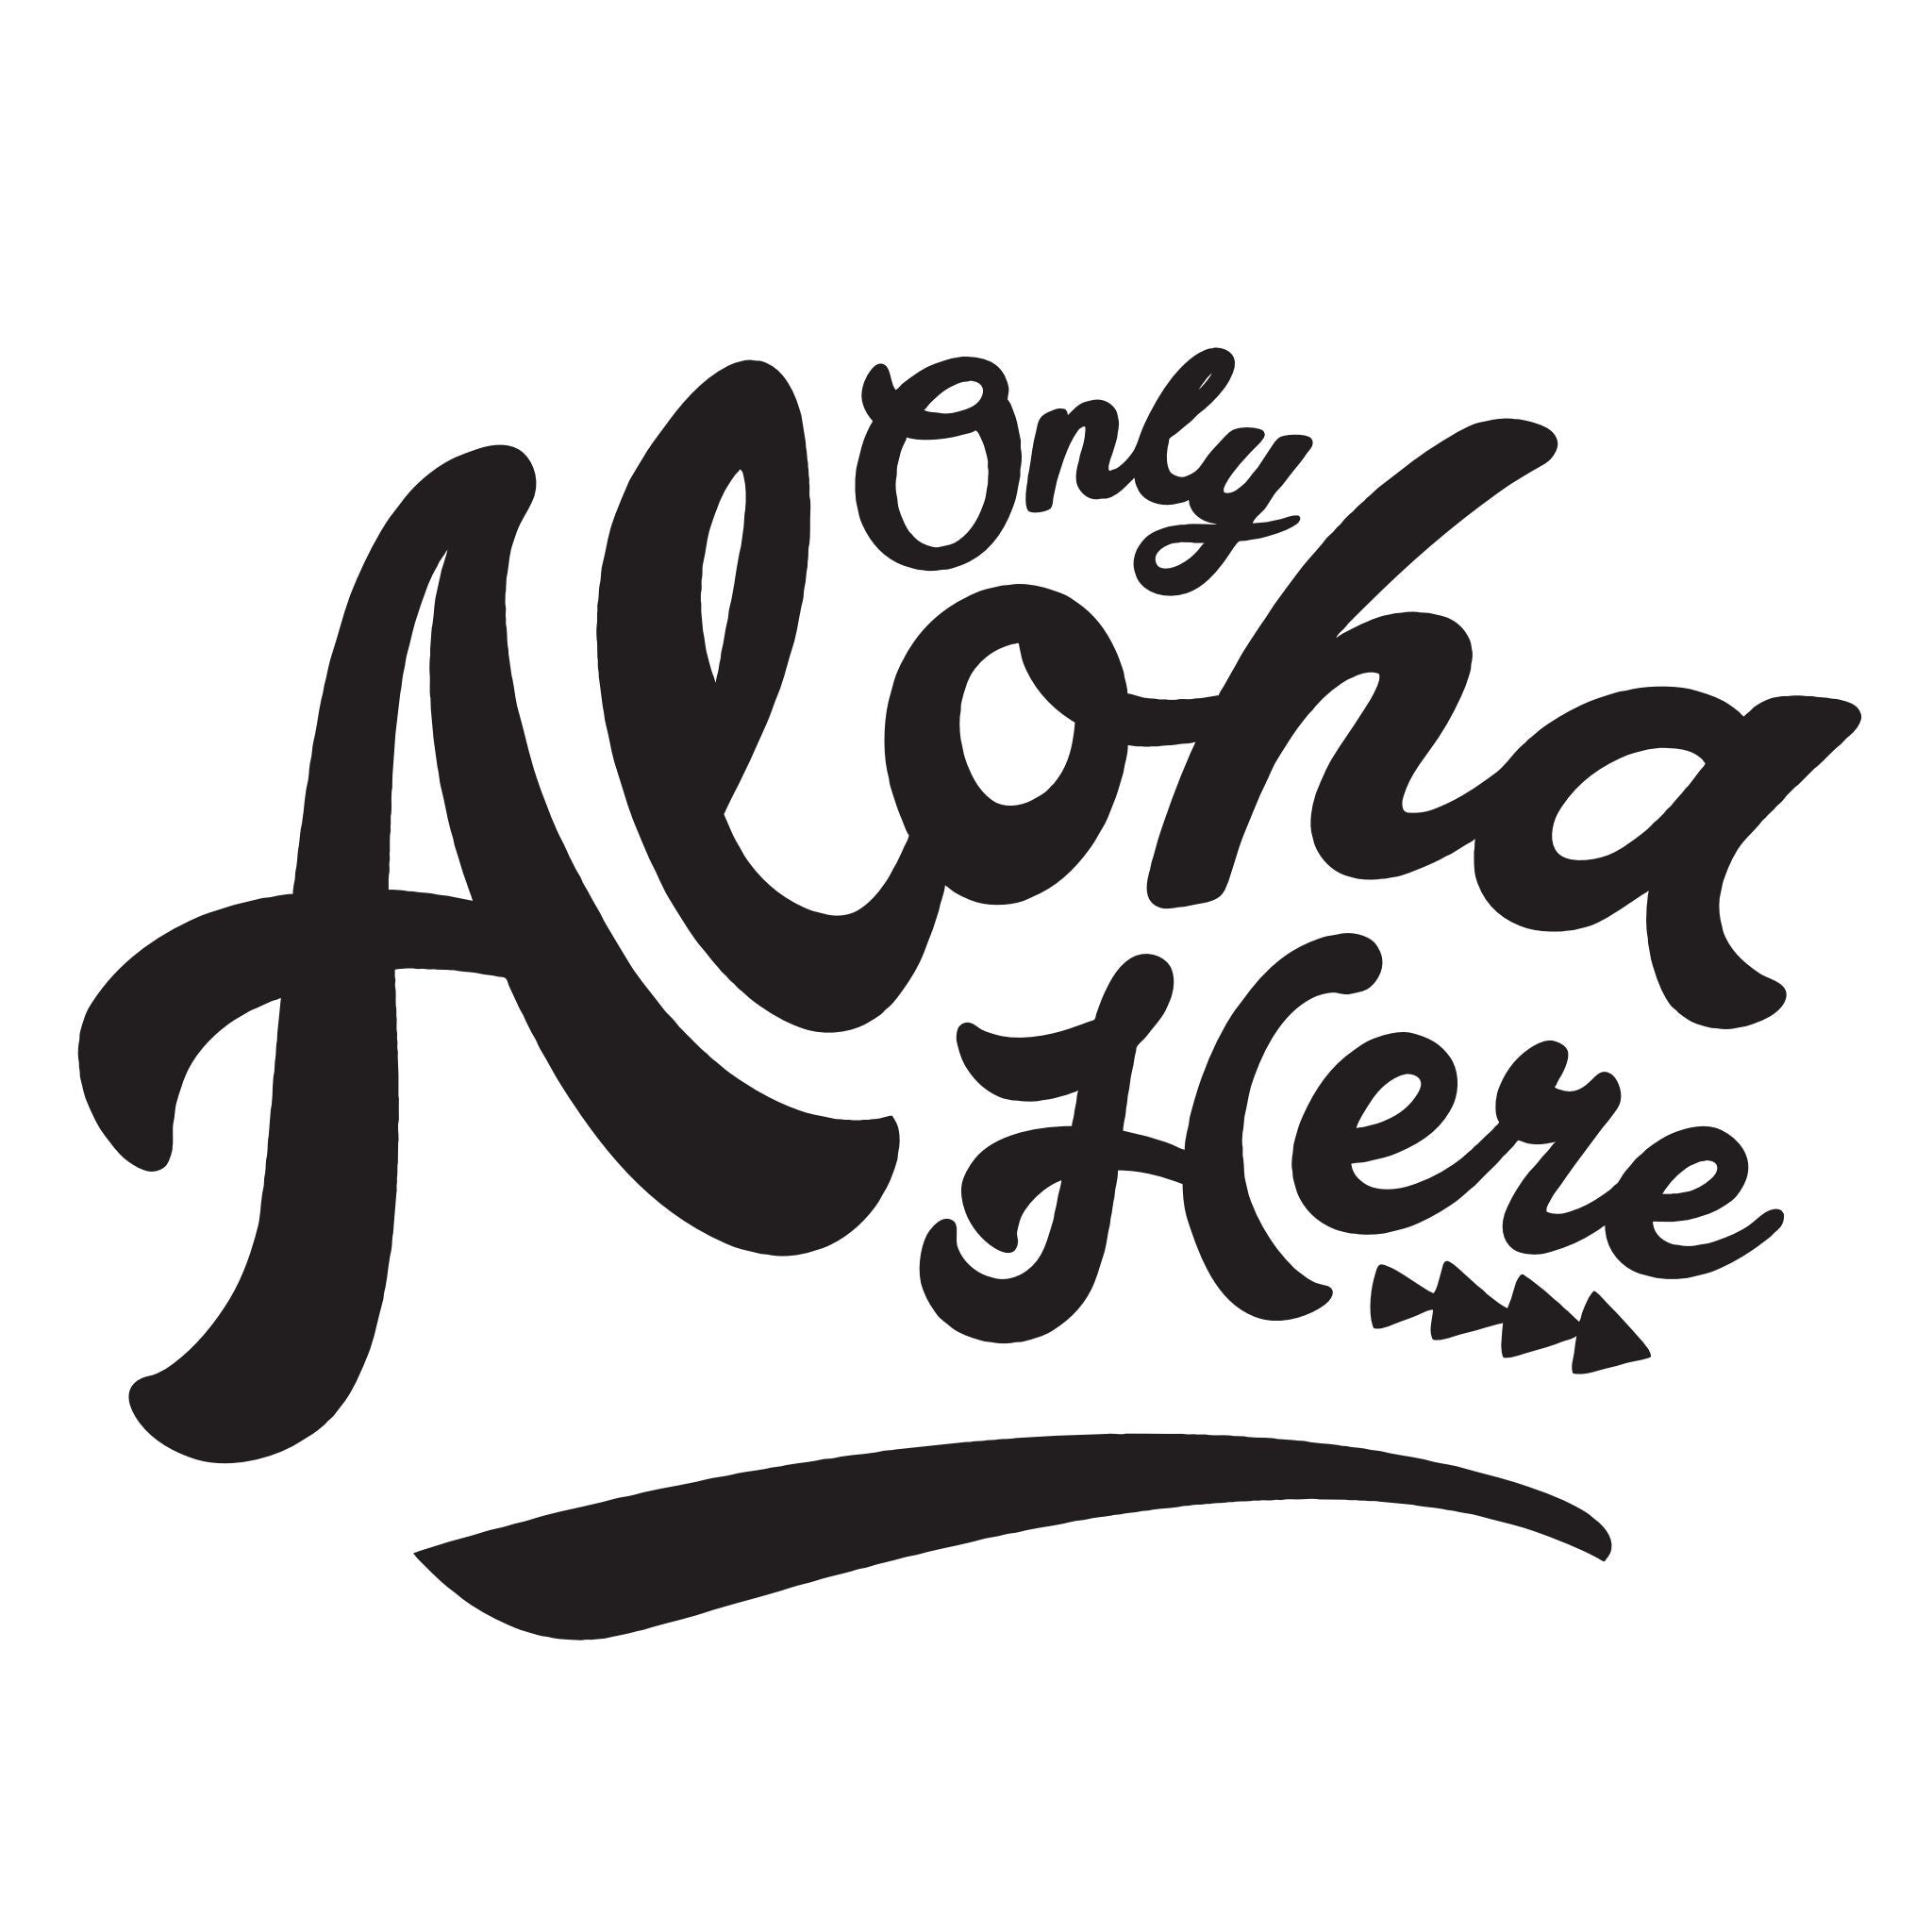 Only Aloha Here